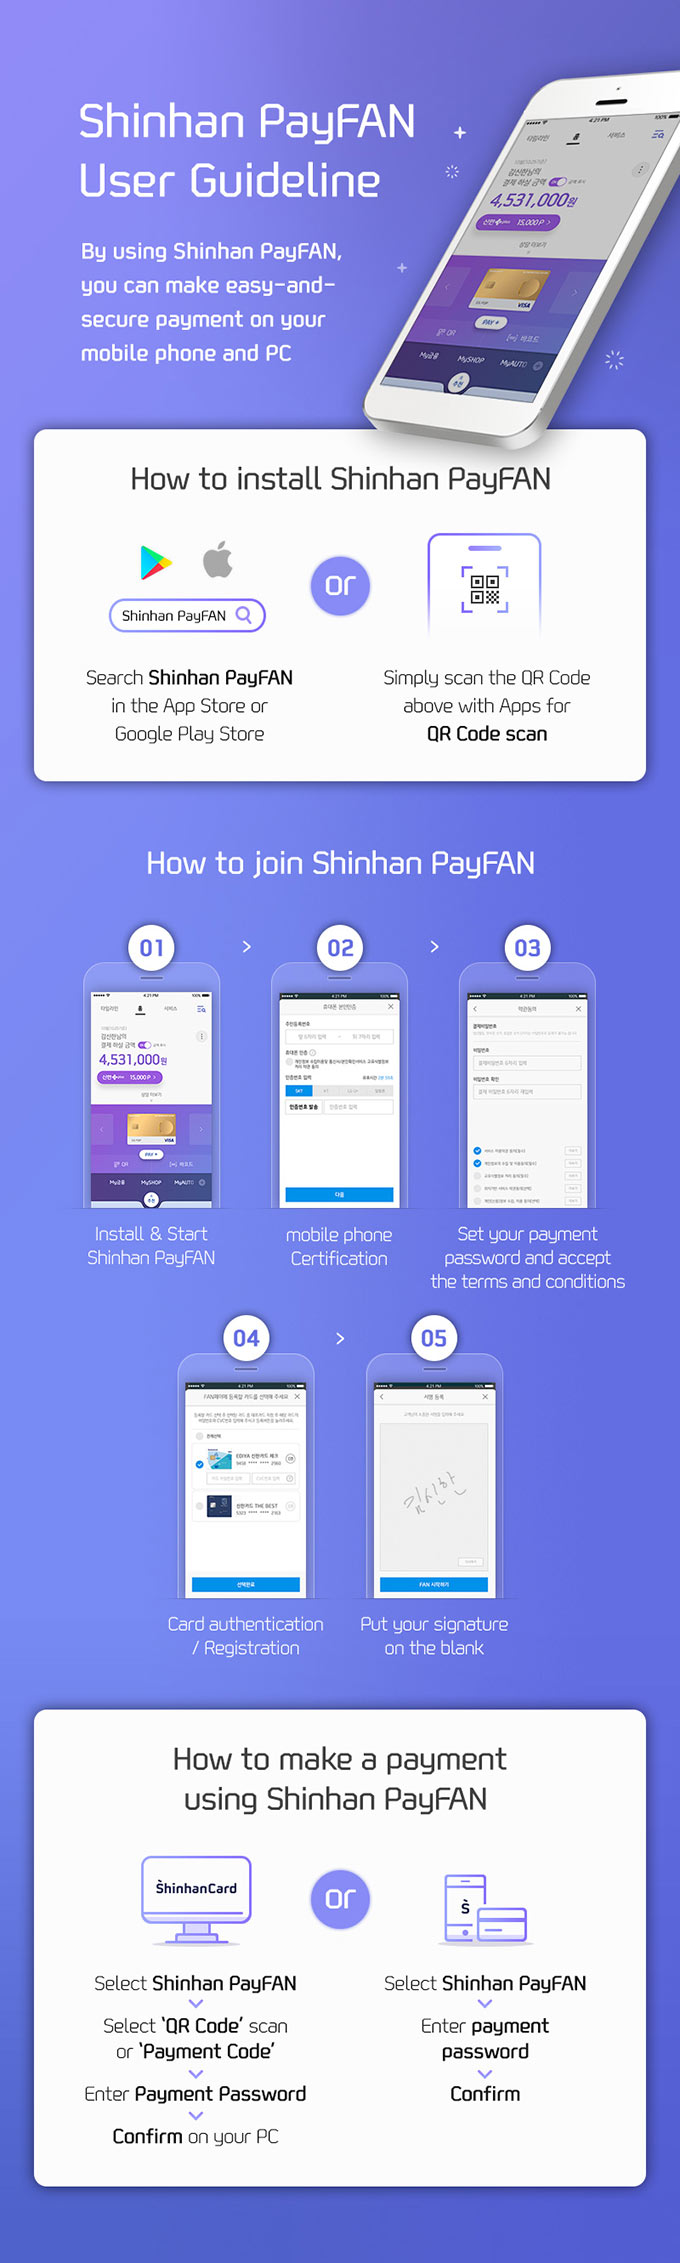 Shinhan PayFAN User Guideline